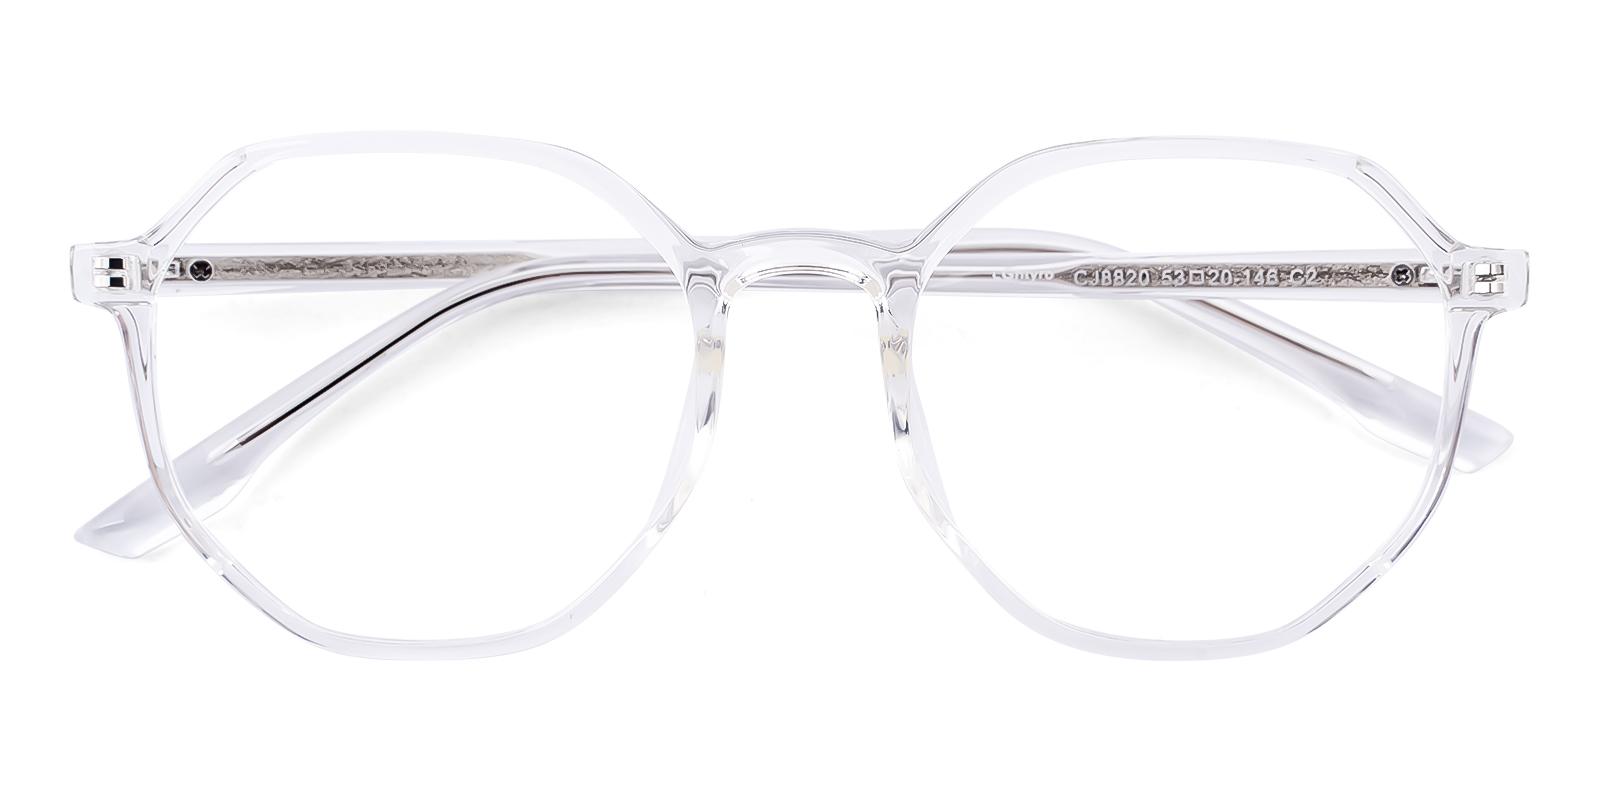 Nasccoach Fclear Plastic Eyeglasses , UniversalBridgeFit Frames from ABBE Glasses